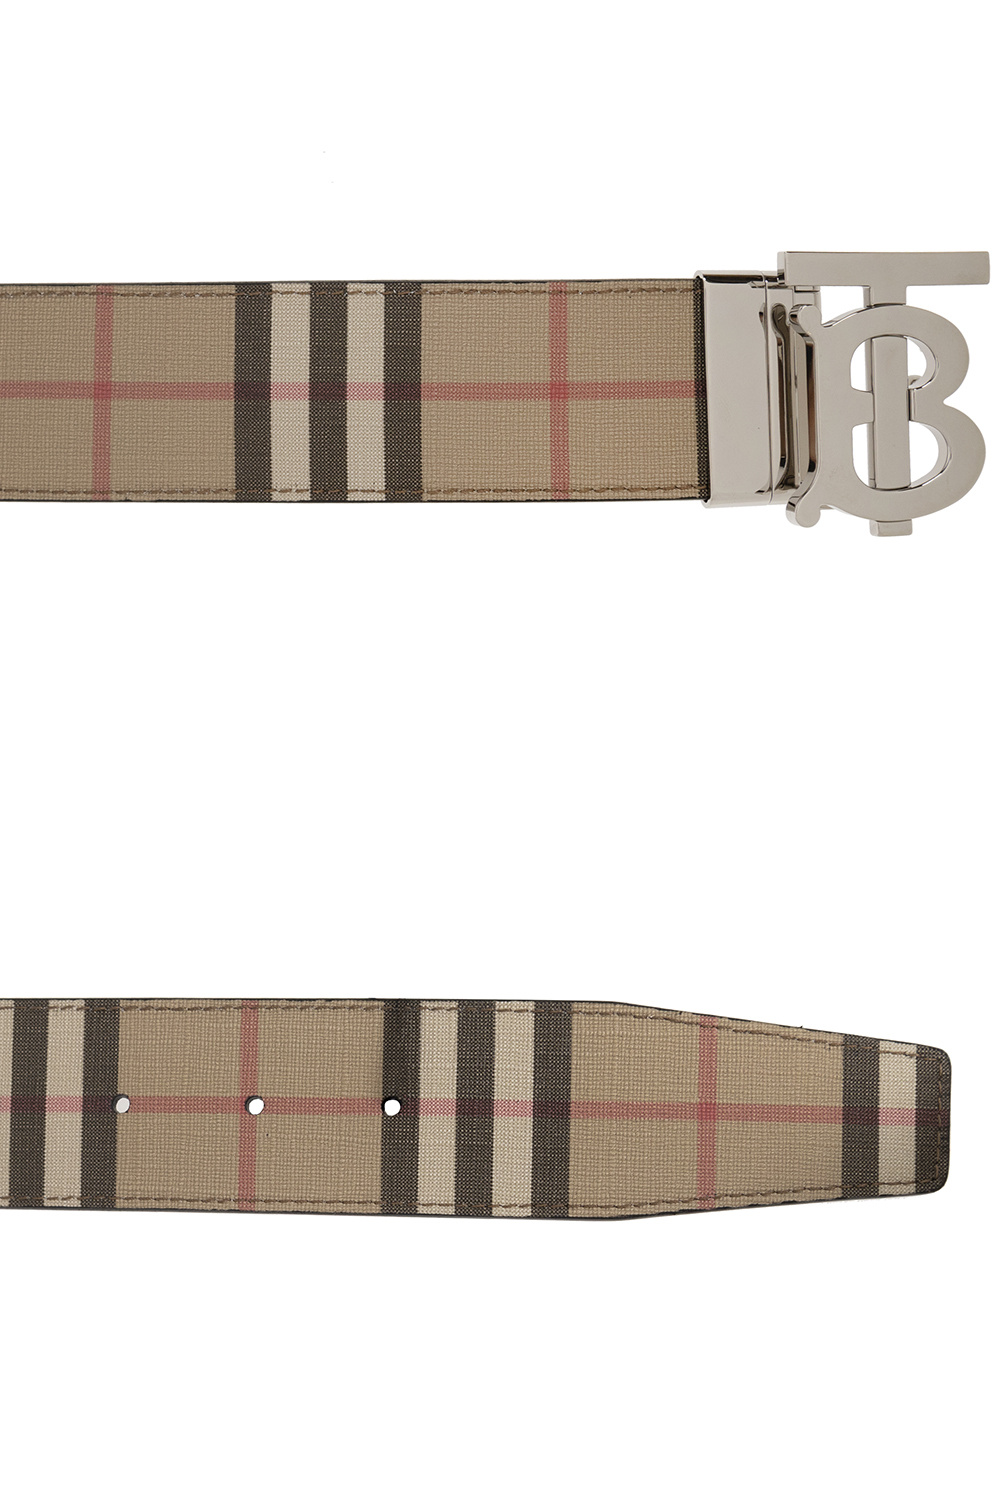 Burberry Men's Reversible Vintage Check Belt